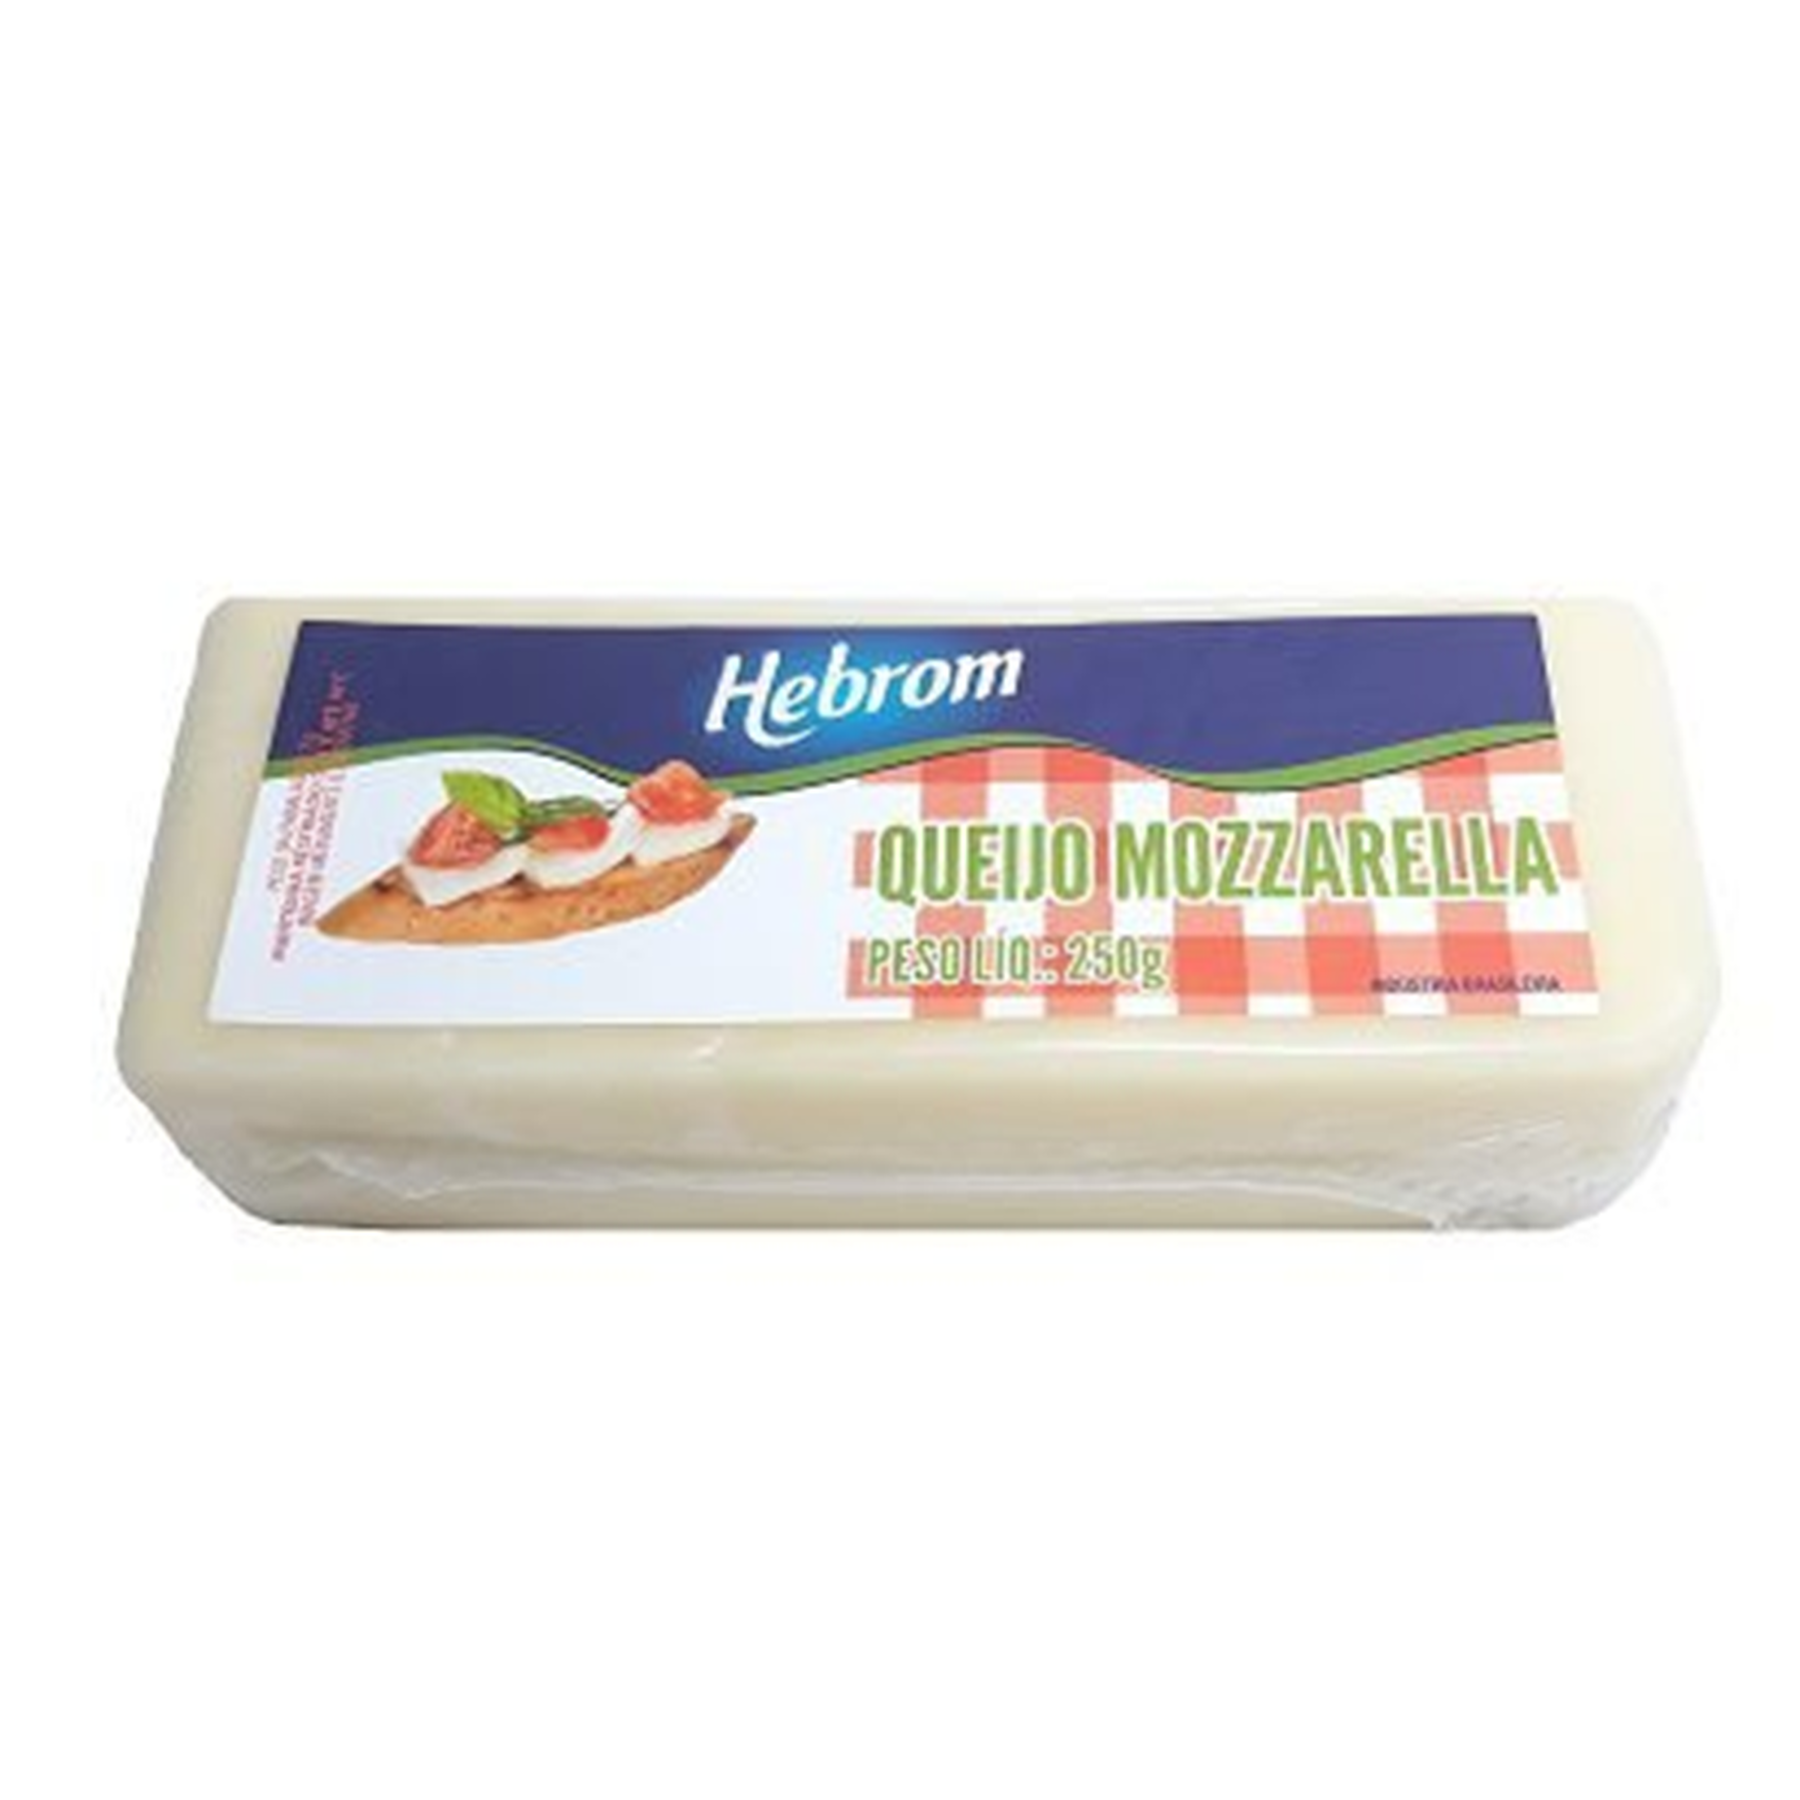 Queijo Mozzarella Hebrom 250g